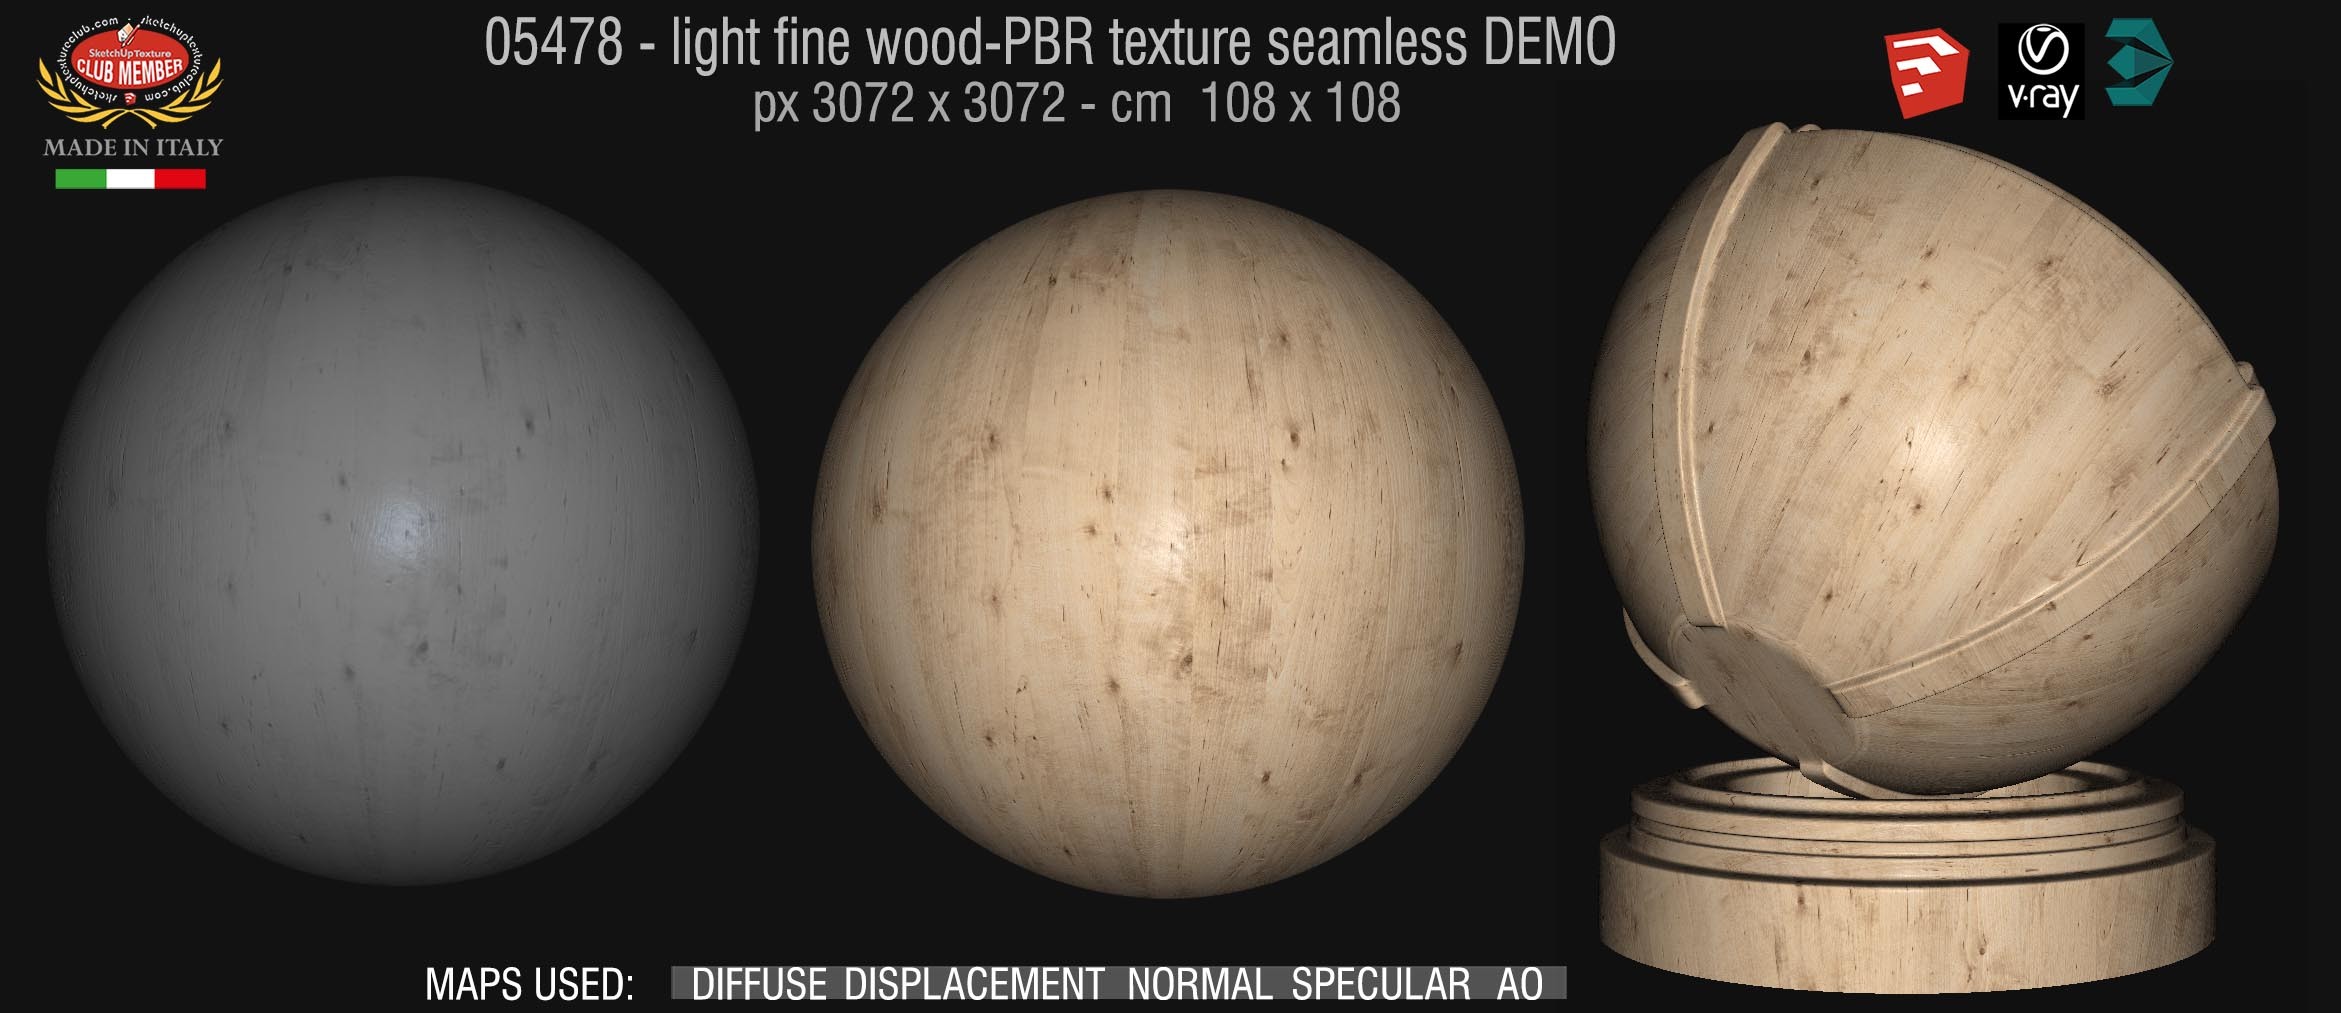 05478 light fine wood-PBR texture seamless DEMO